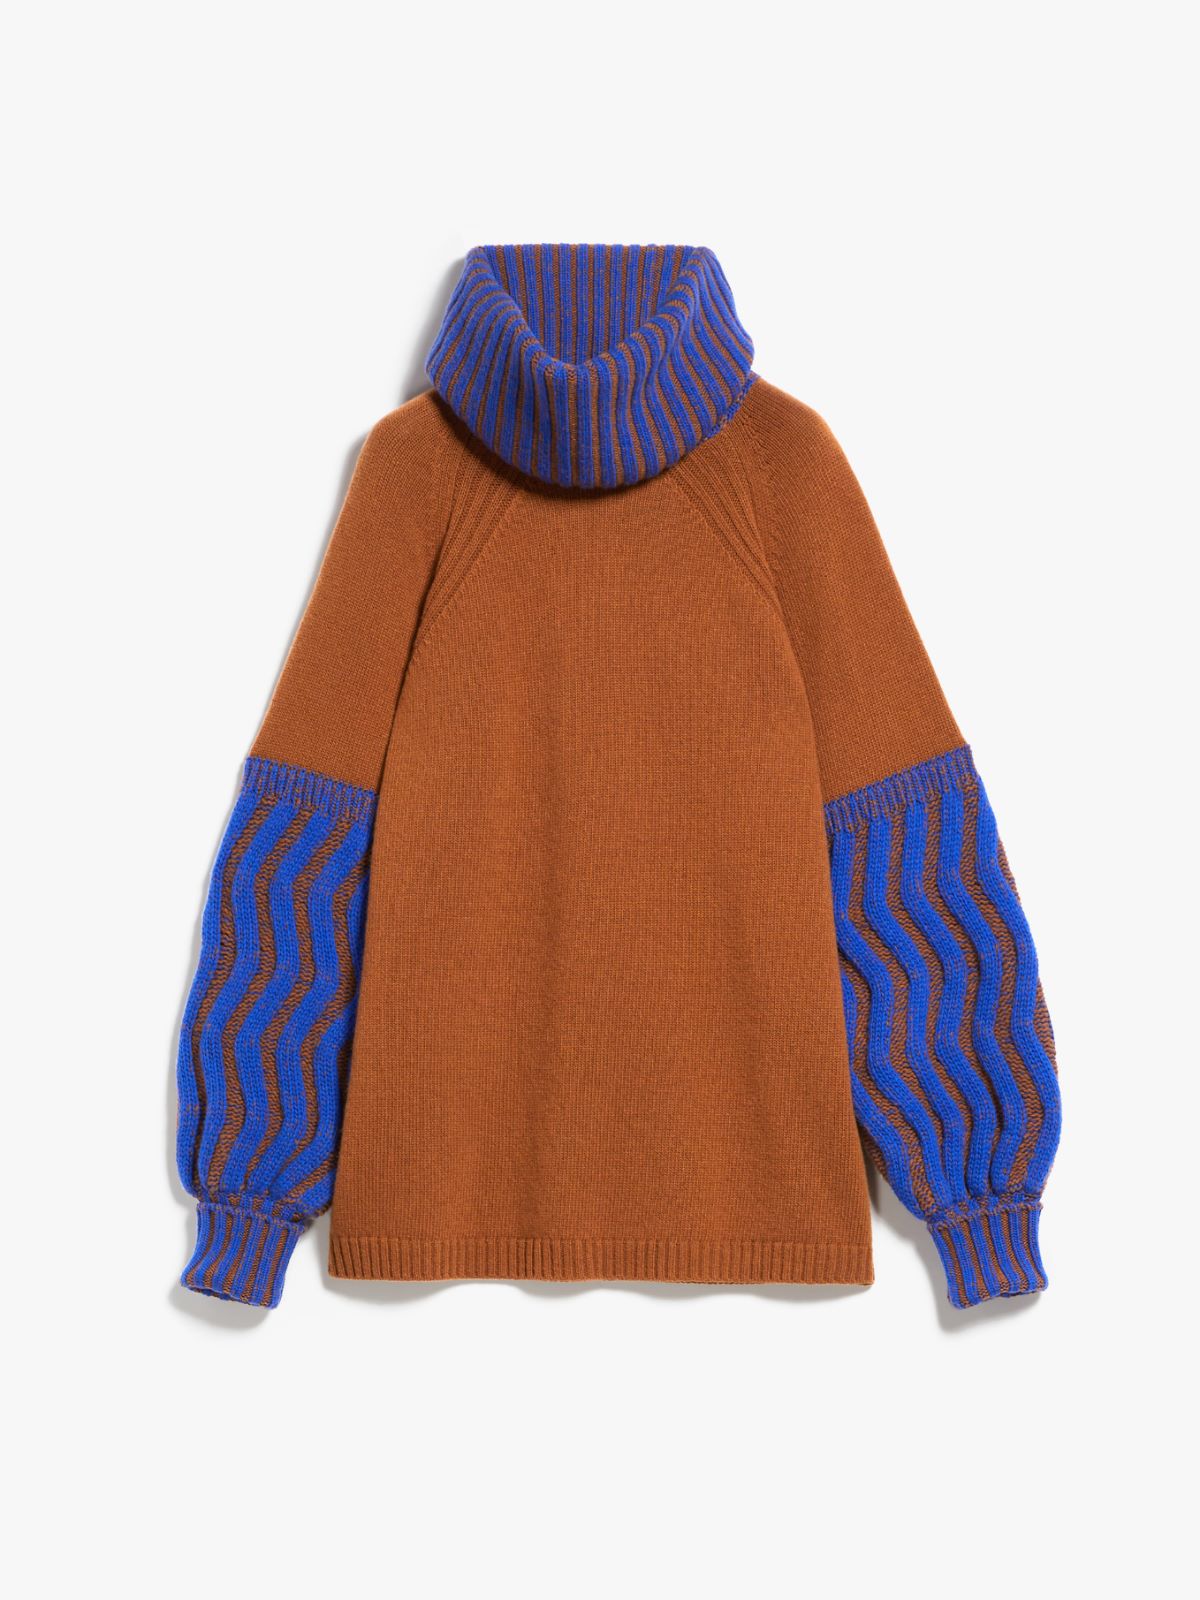 Wool sweater - CORNFLOWER BLUE - Weekend Max Mara - 7